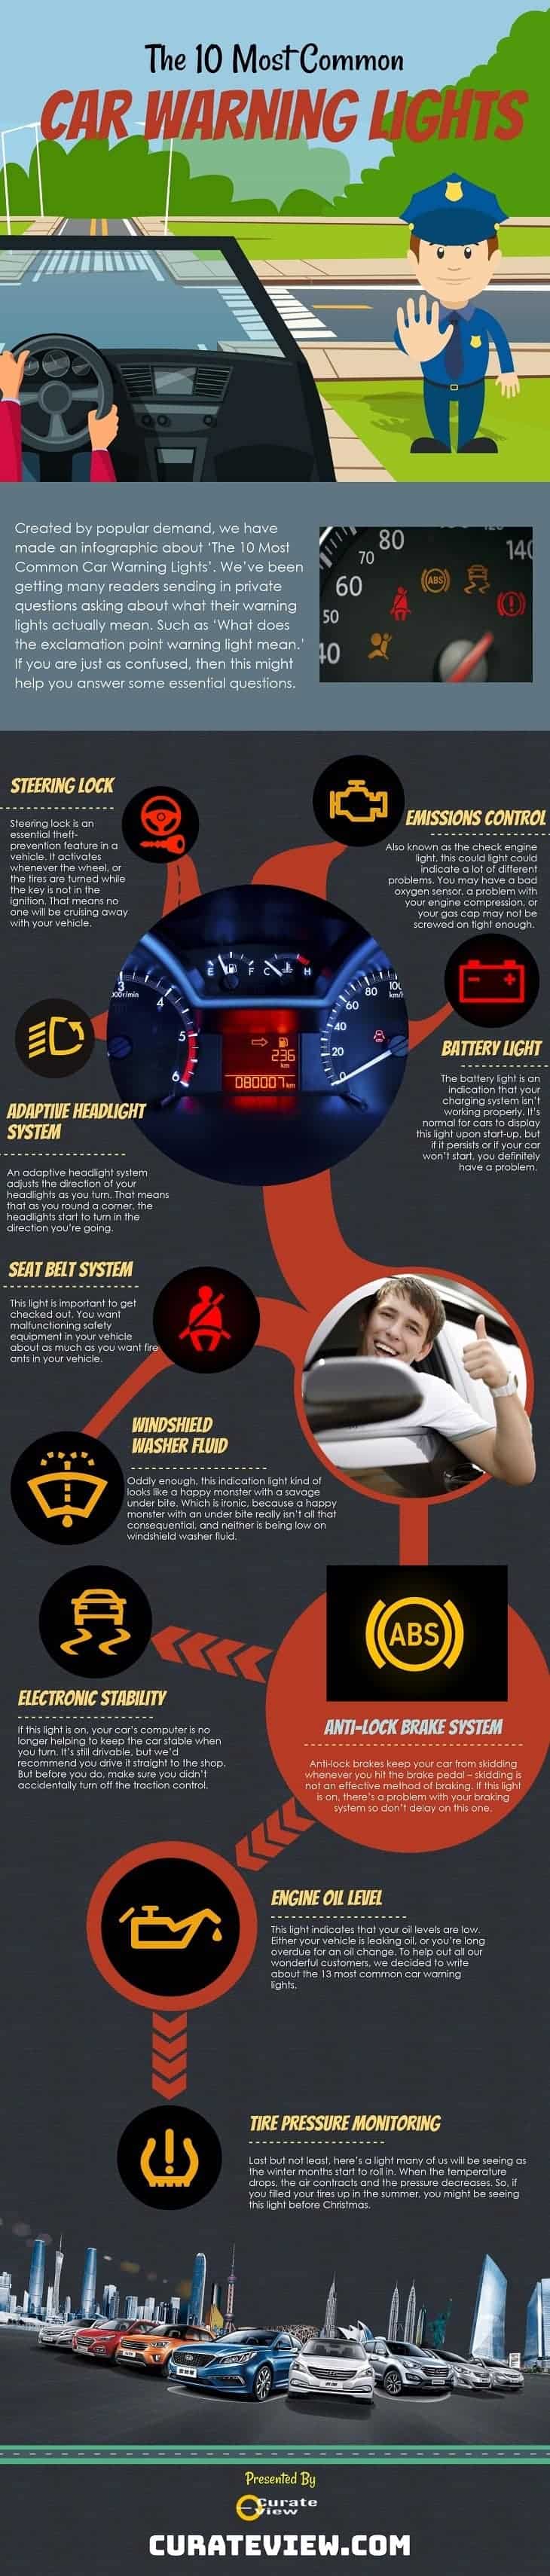 10 Most Common Car Warning Lights